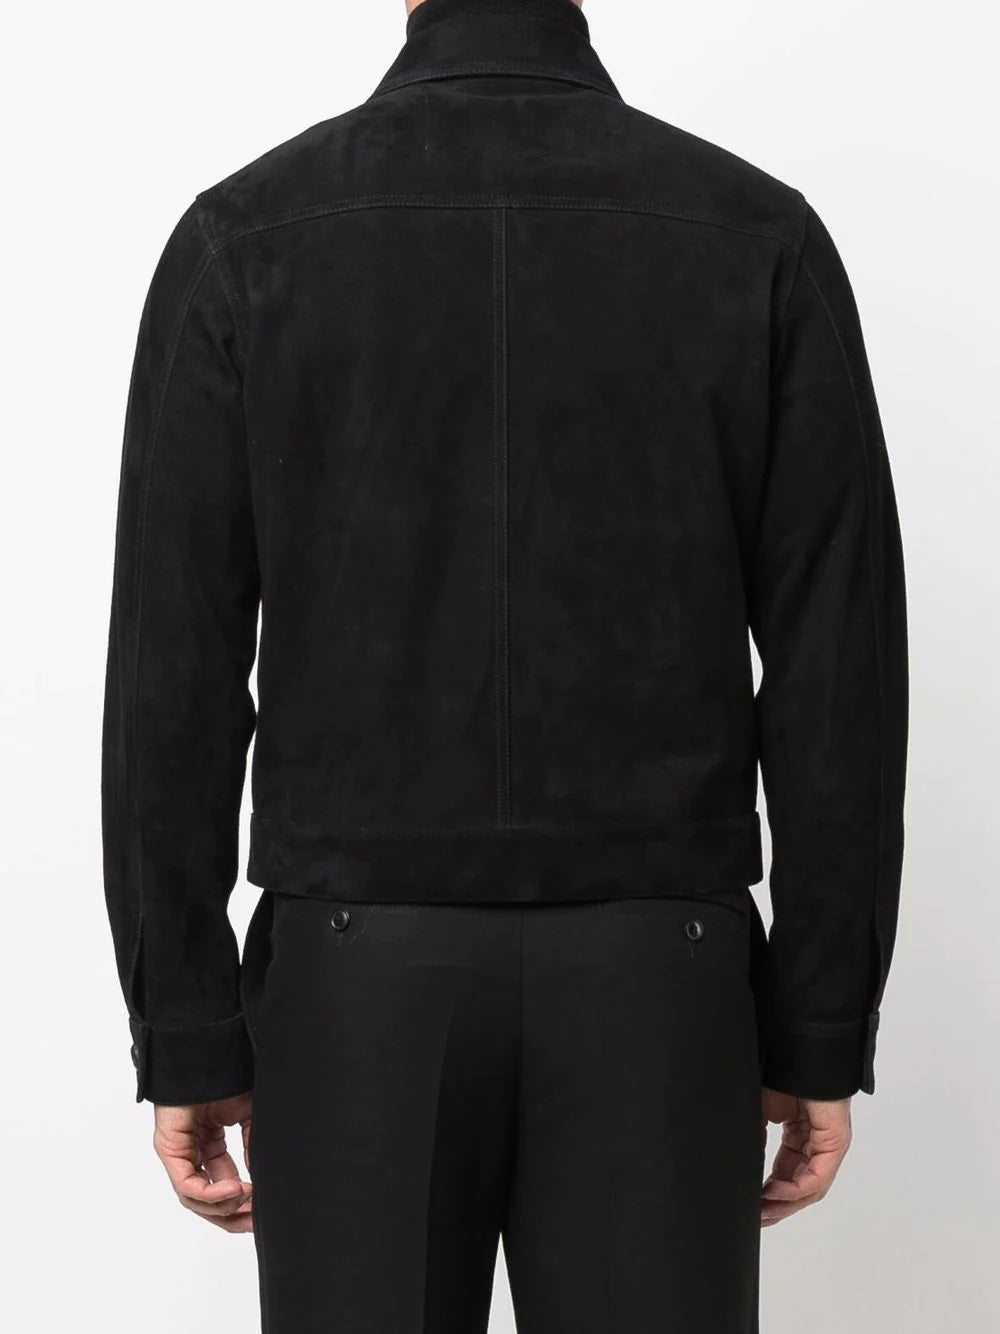 AMI PARIS Suede Buttoned Overshirt Black - MAISONDEFASHION.COM